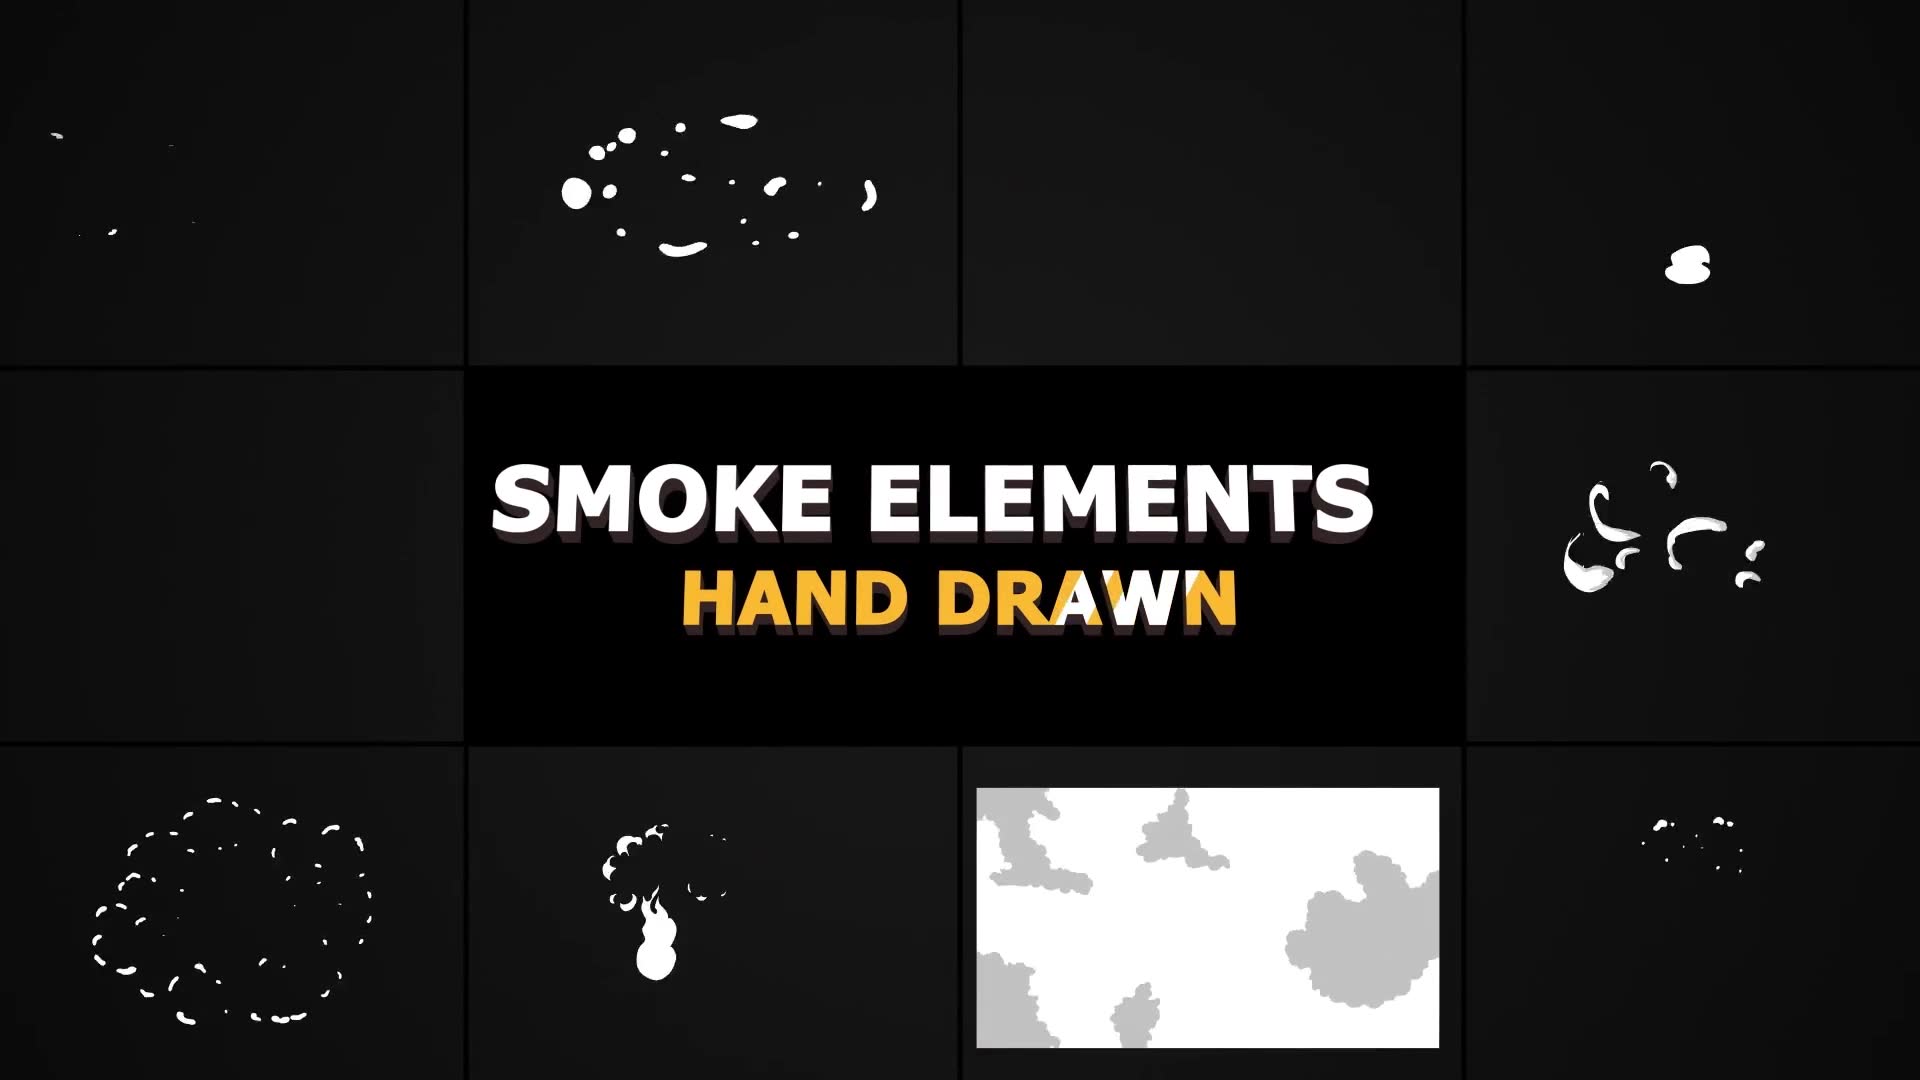 Dynamic Smoke Elements Pack - Download Videohive 23244030